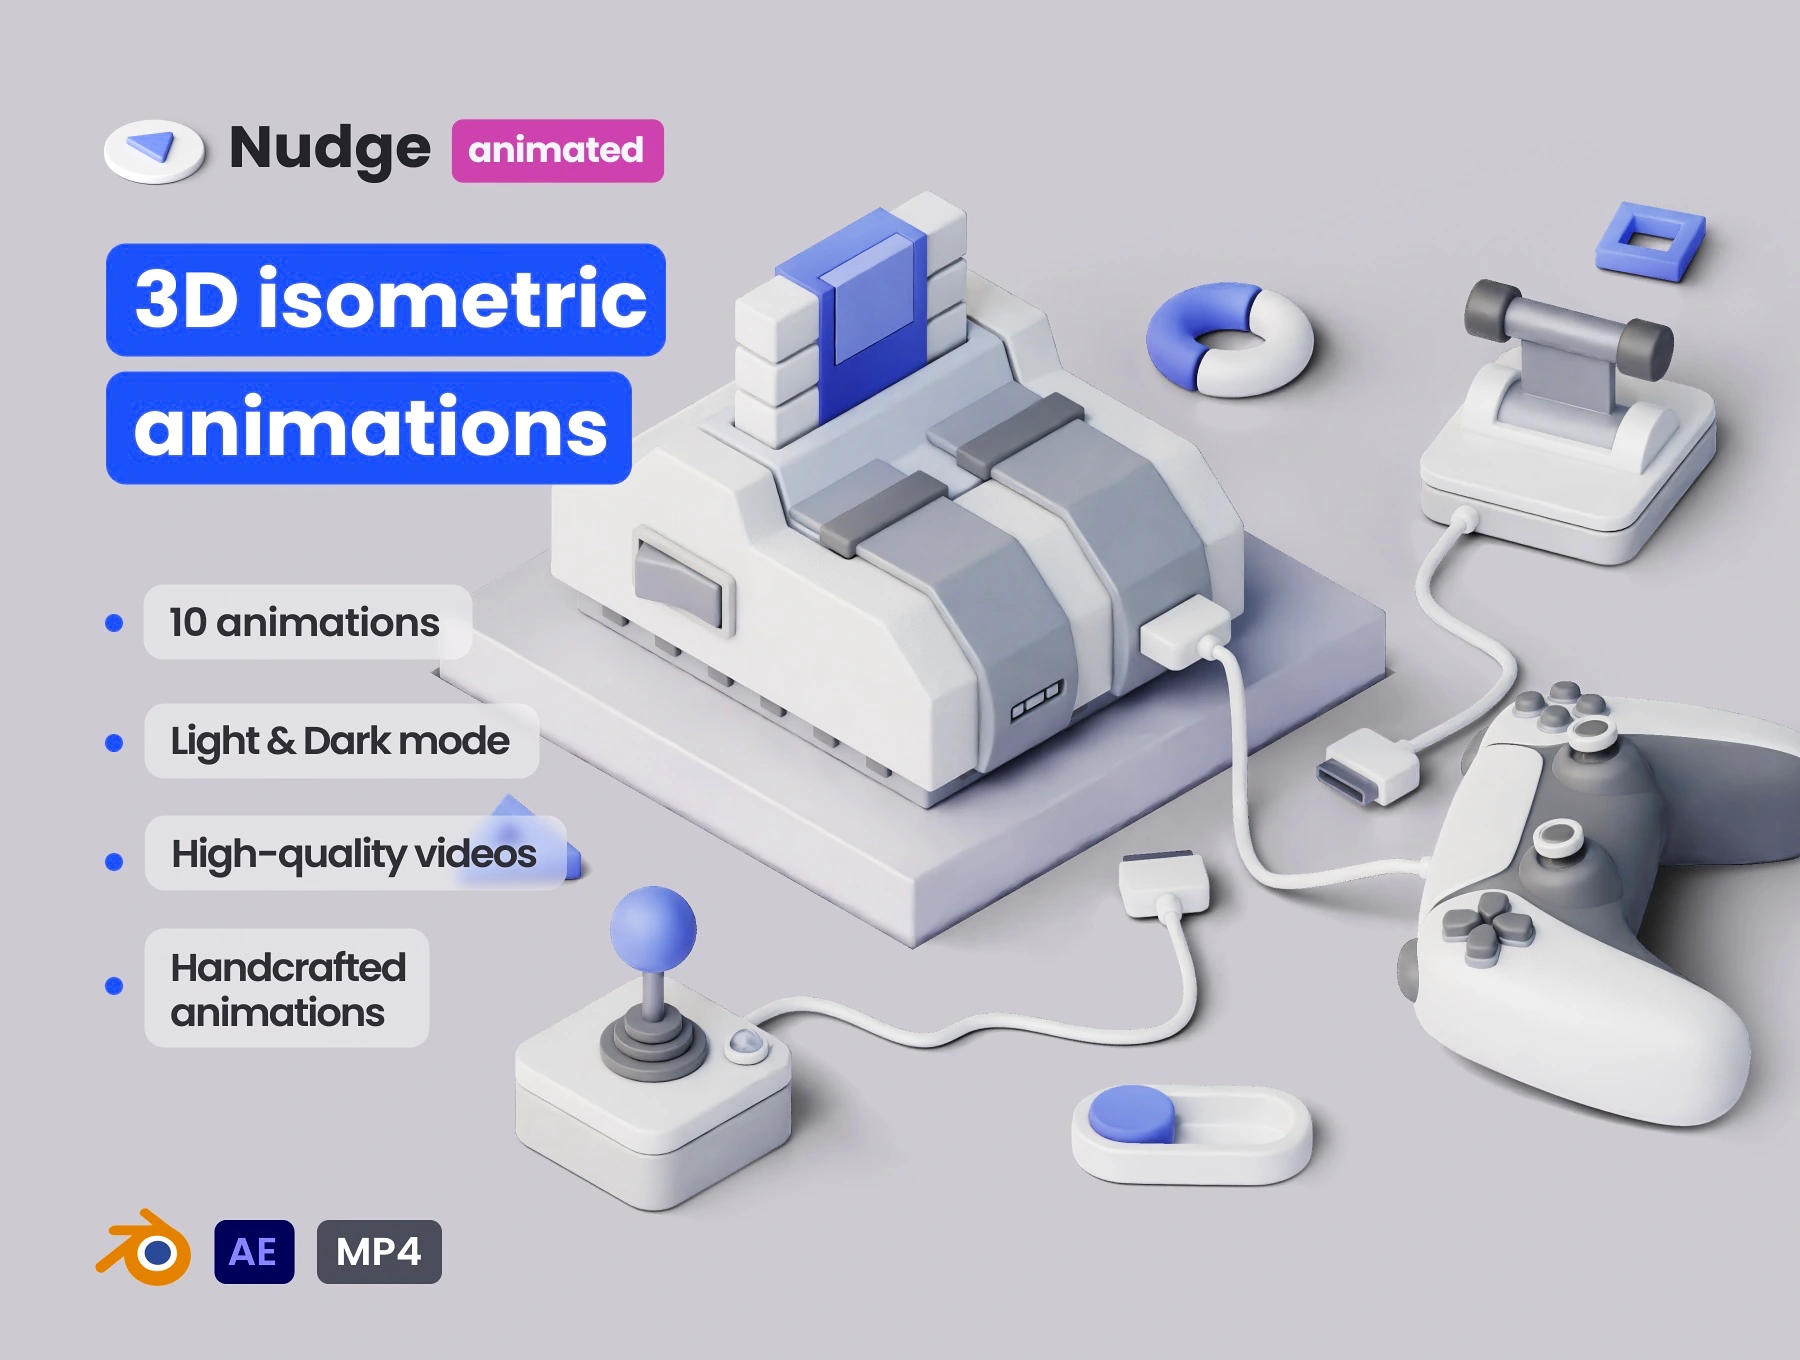 [VIP] Nudge 3D animated